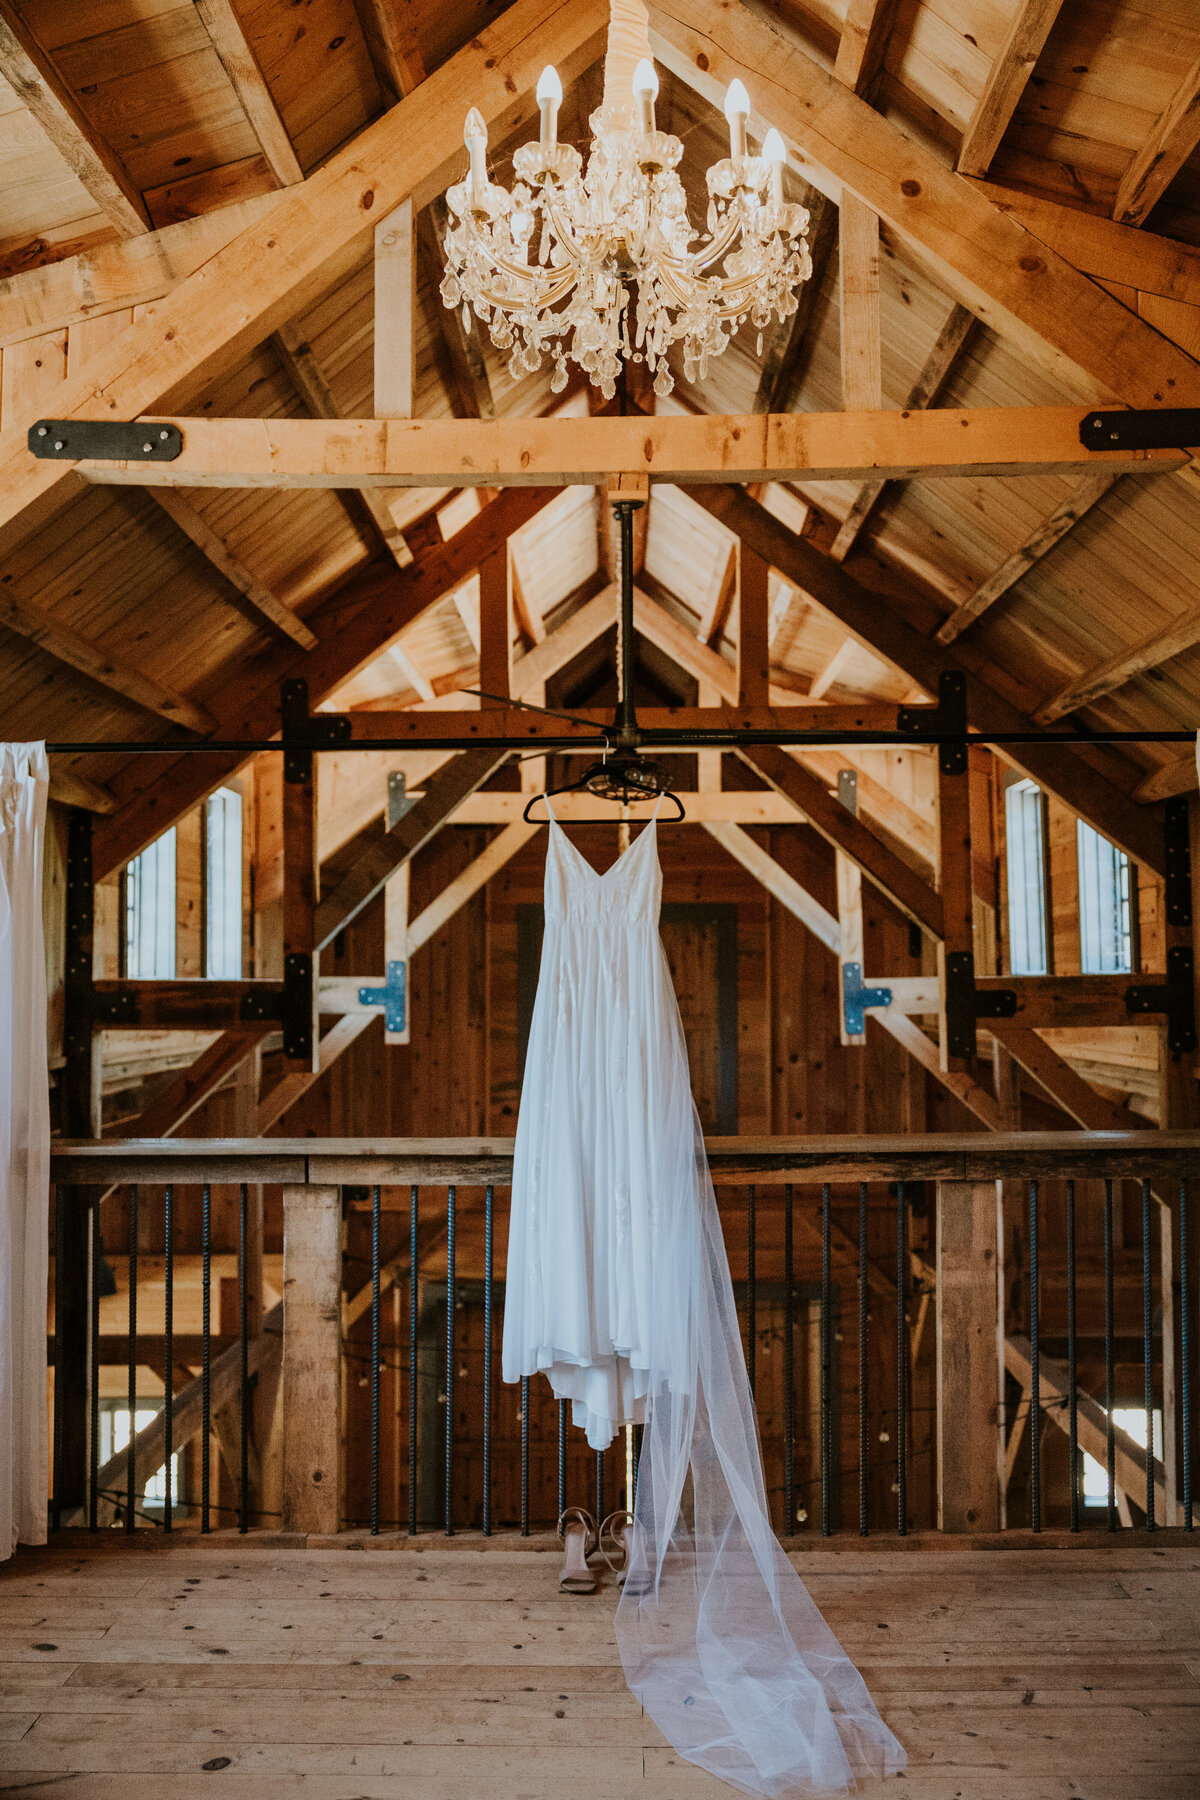 Wedding dress hangs off of rafters in large warm barn.